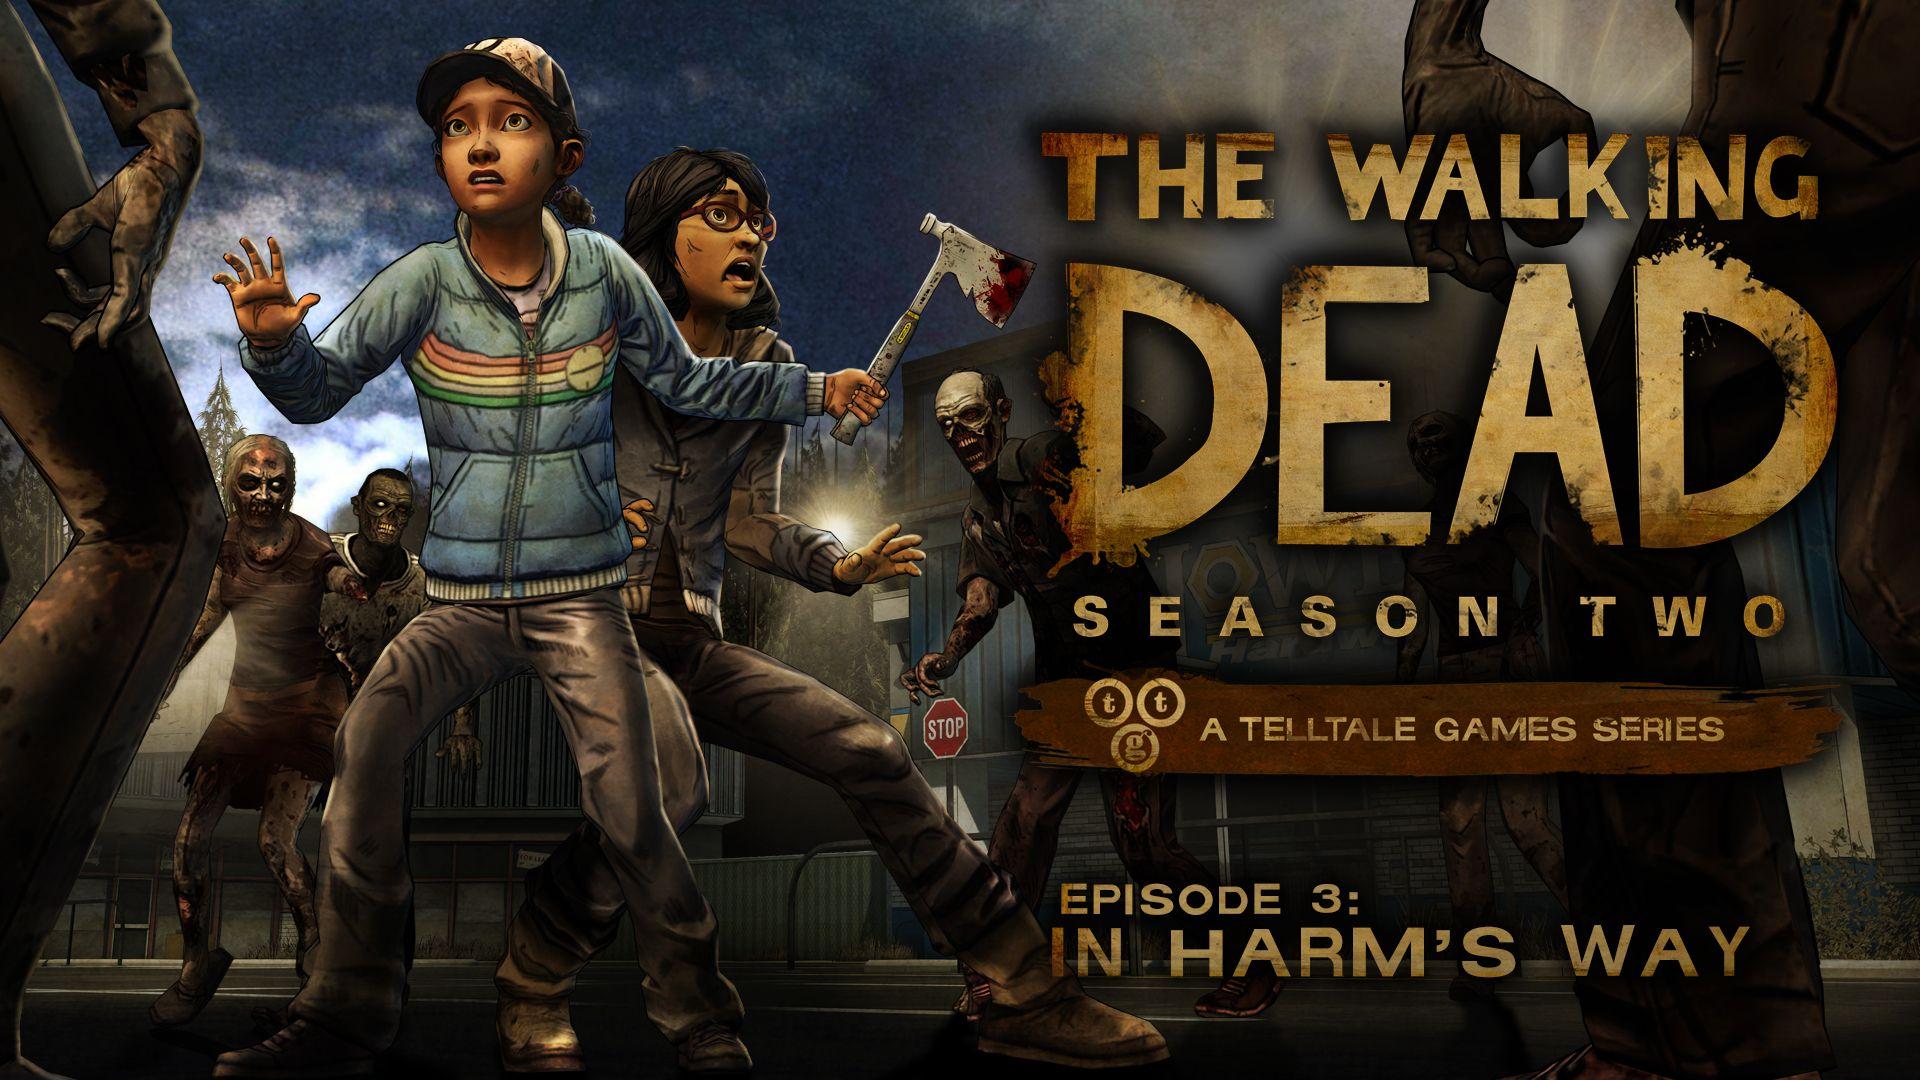 The Walking Dead Season 2: Episode 3 'In Harm's Way' Preview